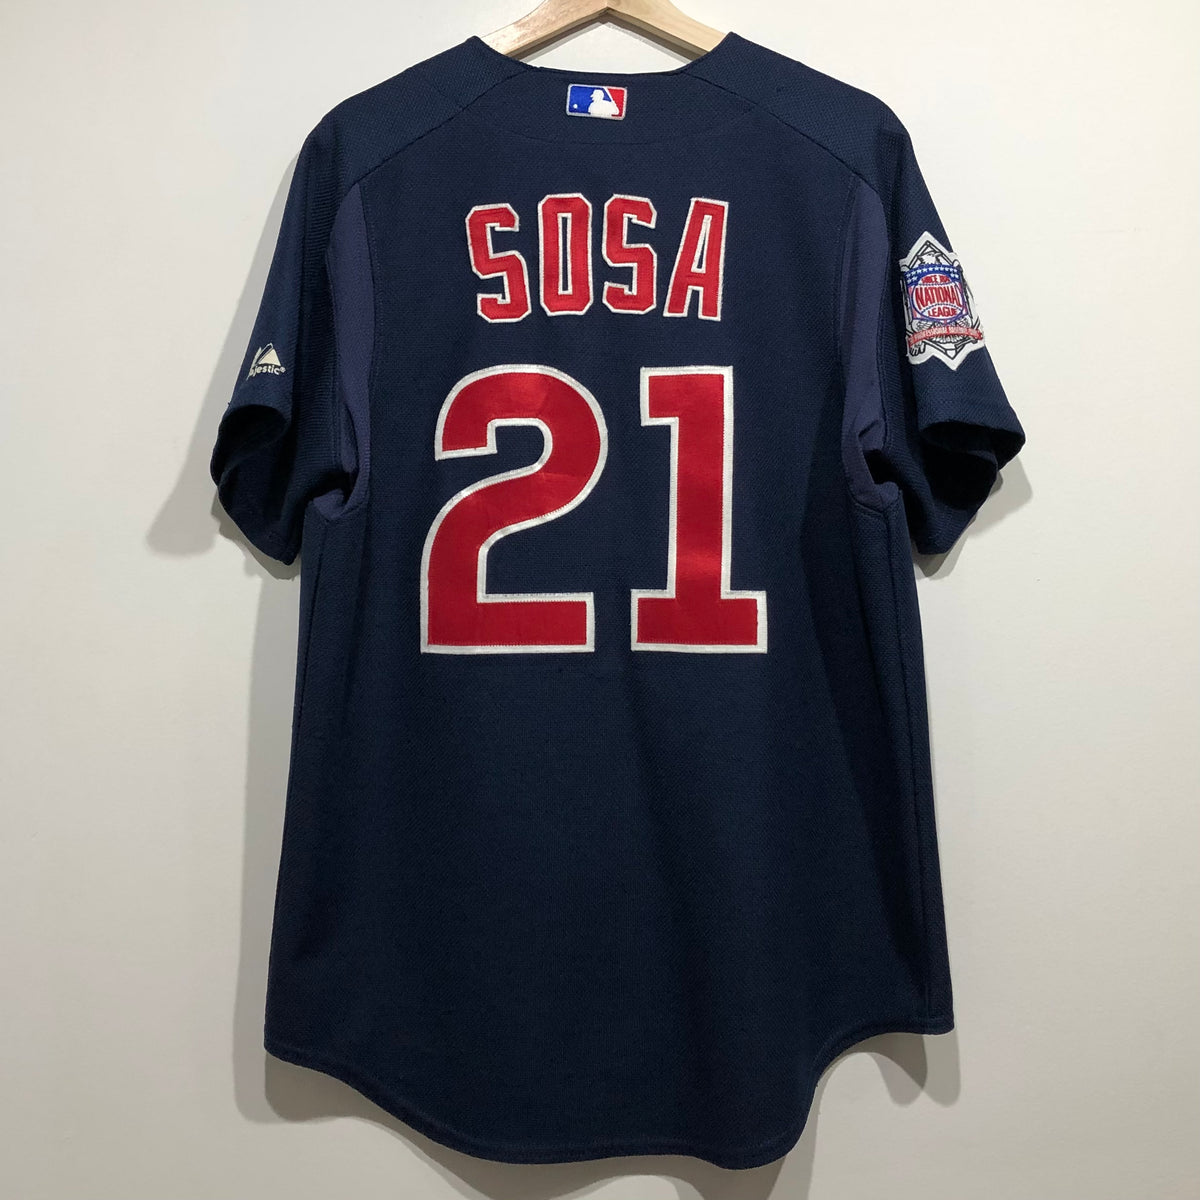 Vintage'90s MLB Chicago Cubs #21 Sammy Sosa Majestic Authentic